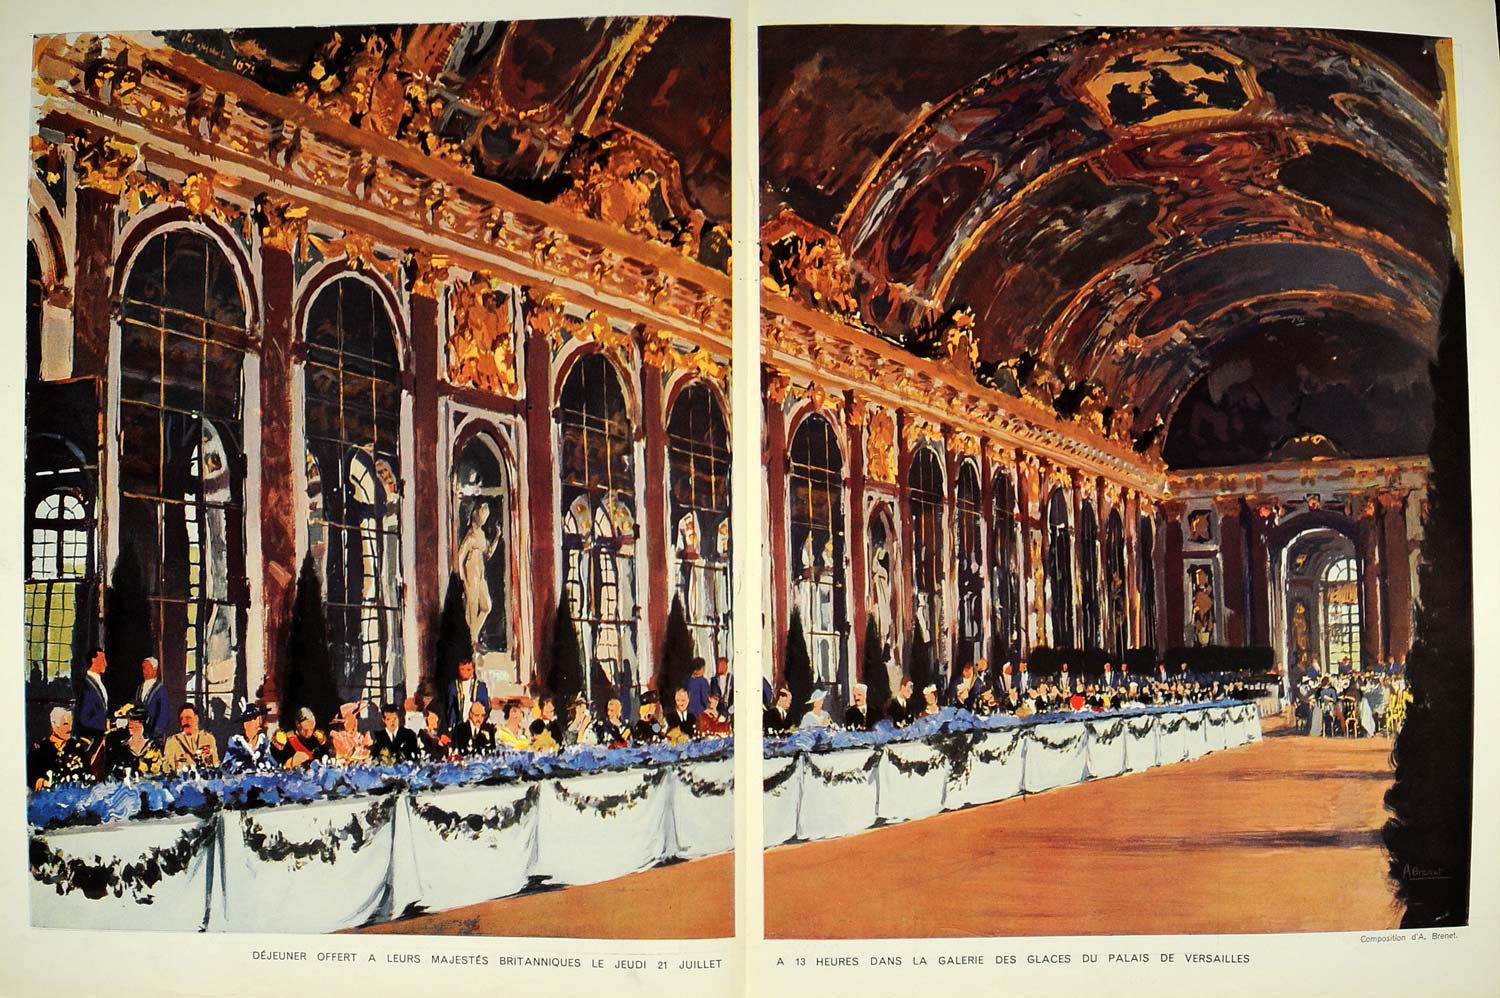 1938 Galerie des Glaces Versailles Royalty Lunch Print - ORIGINAL ILL2